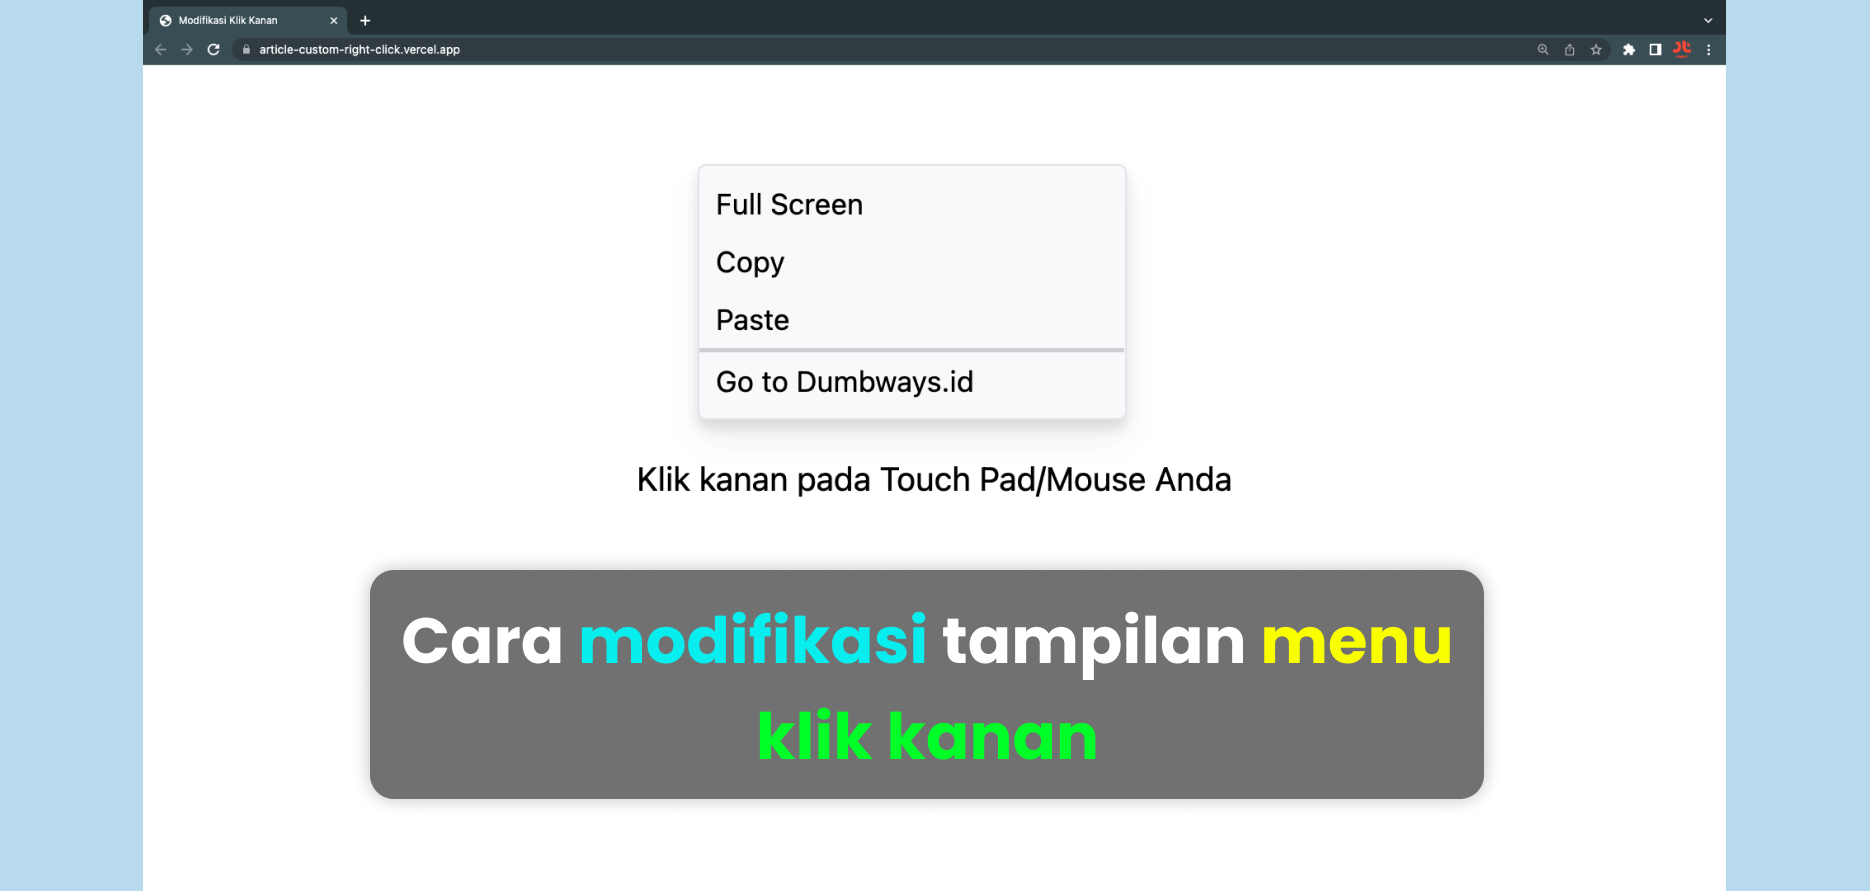 Cara modifikasi tampilan menu klik kanan